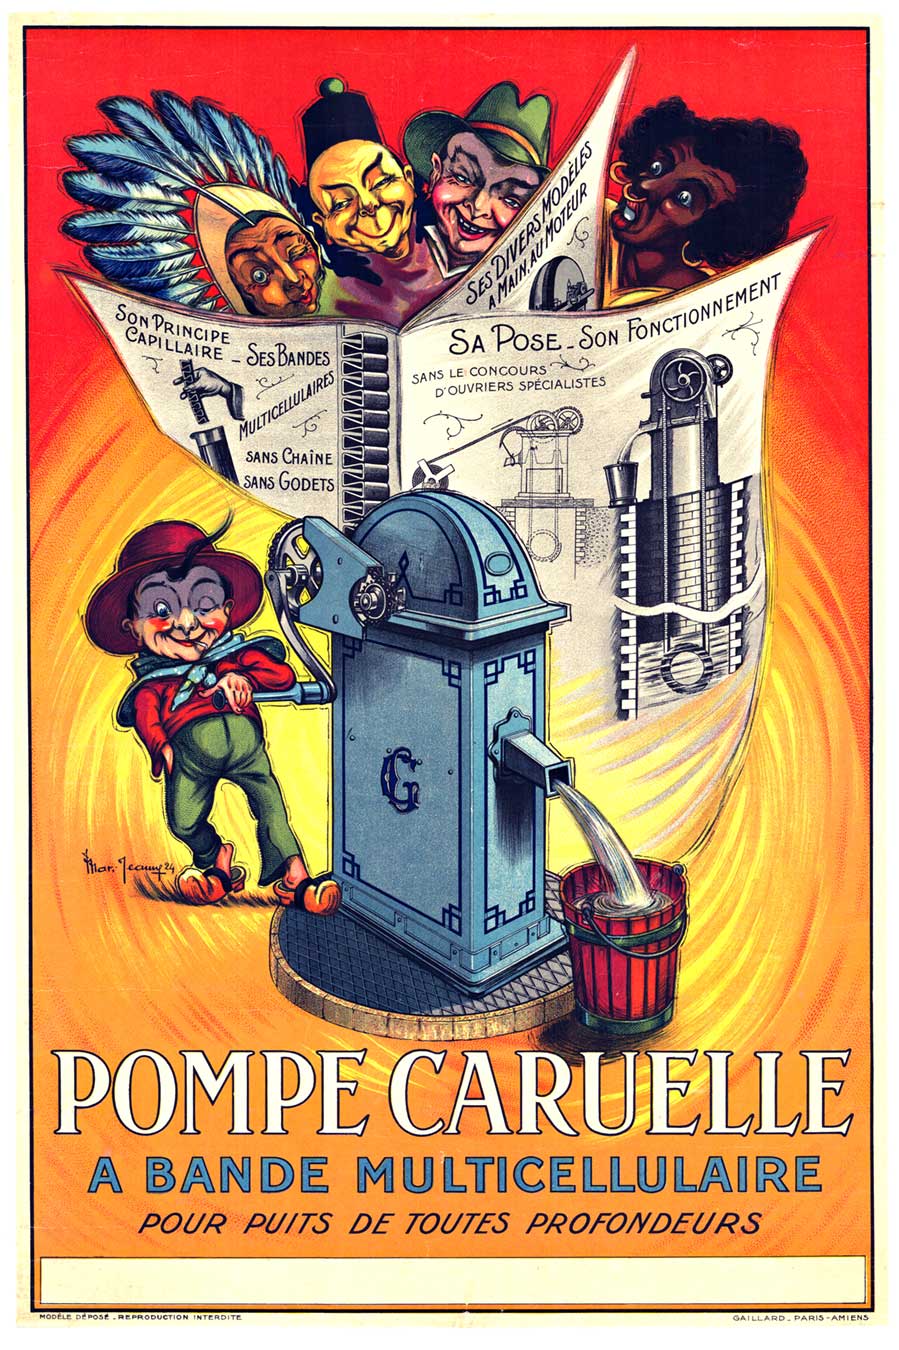 Original linen backed fun vintage poster "POMPE CARUELLE" stone lithograph from 1924. A bande multicellulaaire pour puits de toutes profondeurs. Printed by Gaillard, Paris, France.